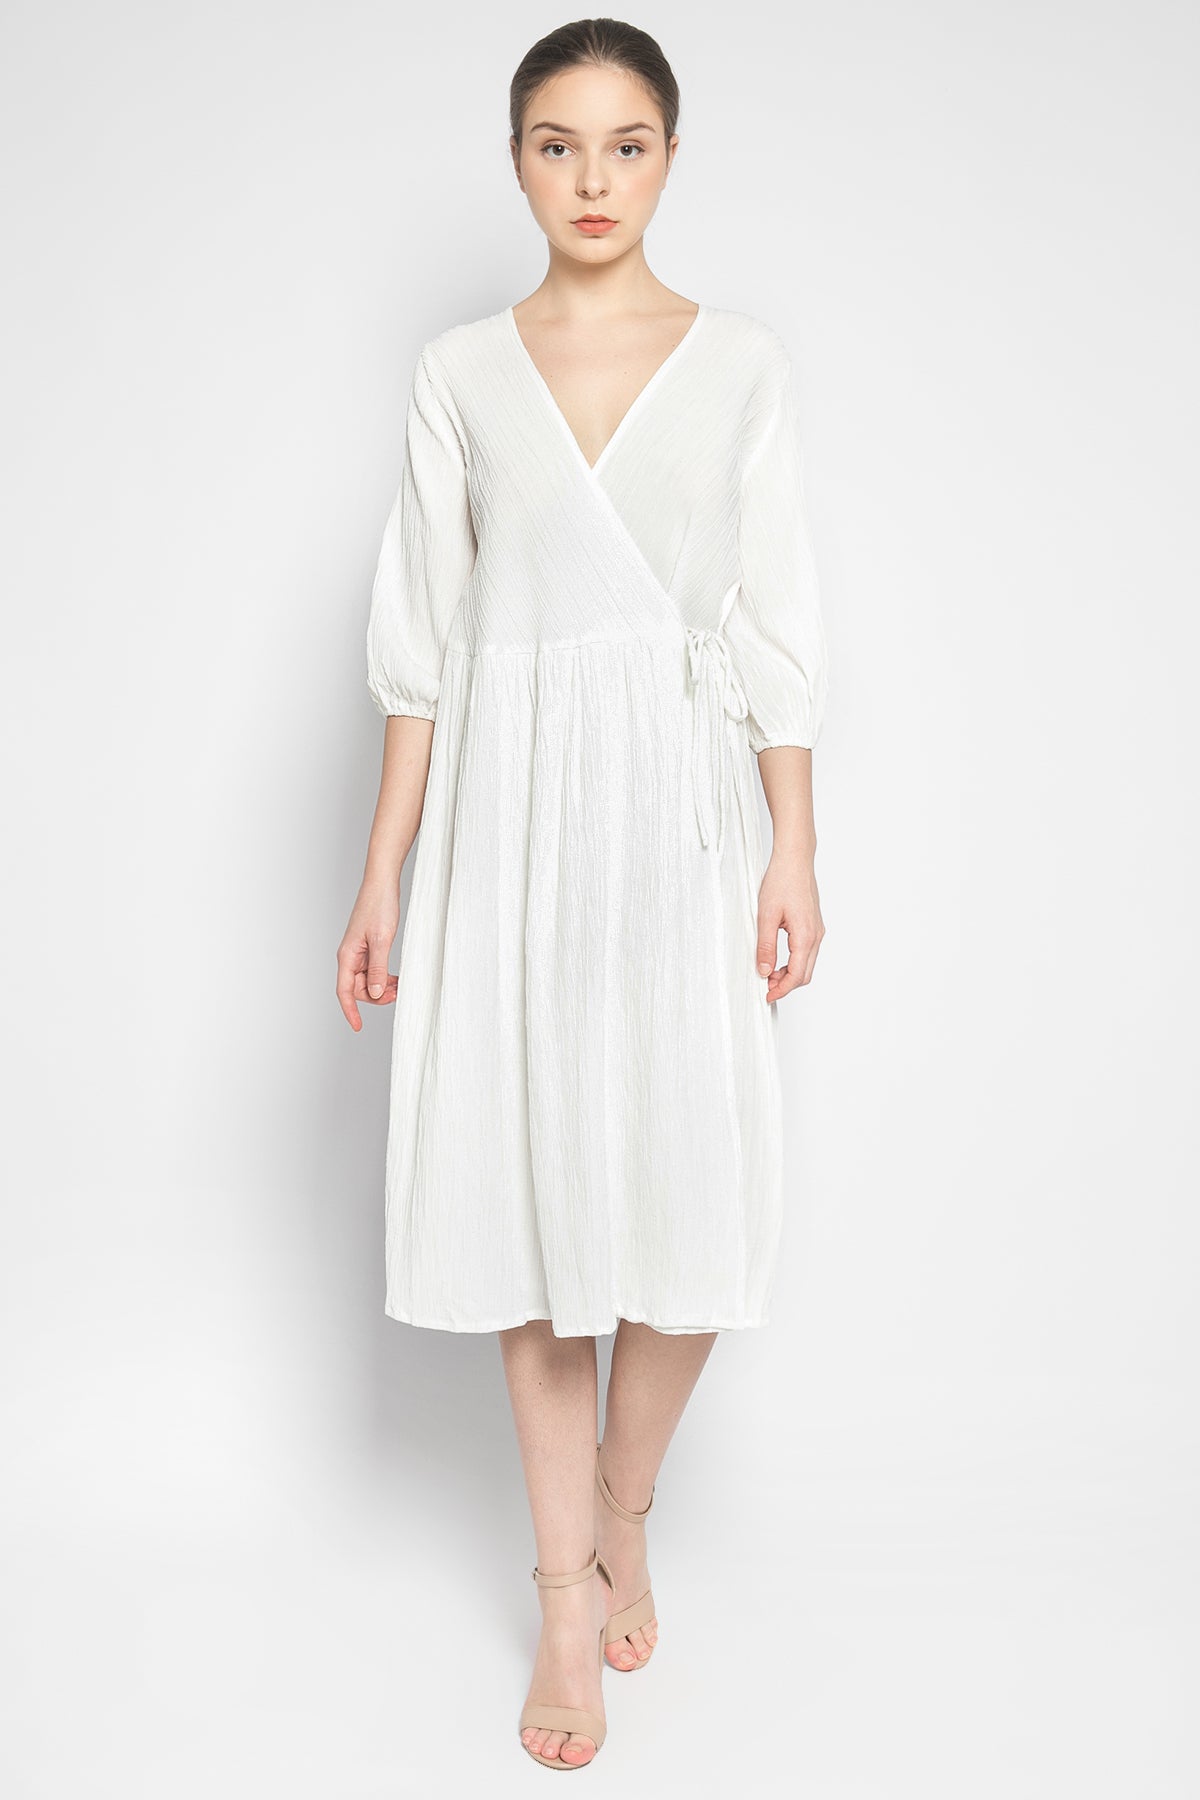 Paloma Dress in White